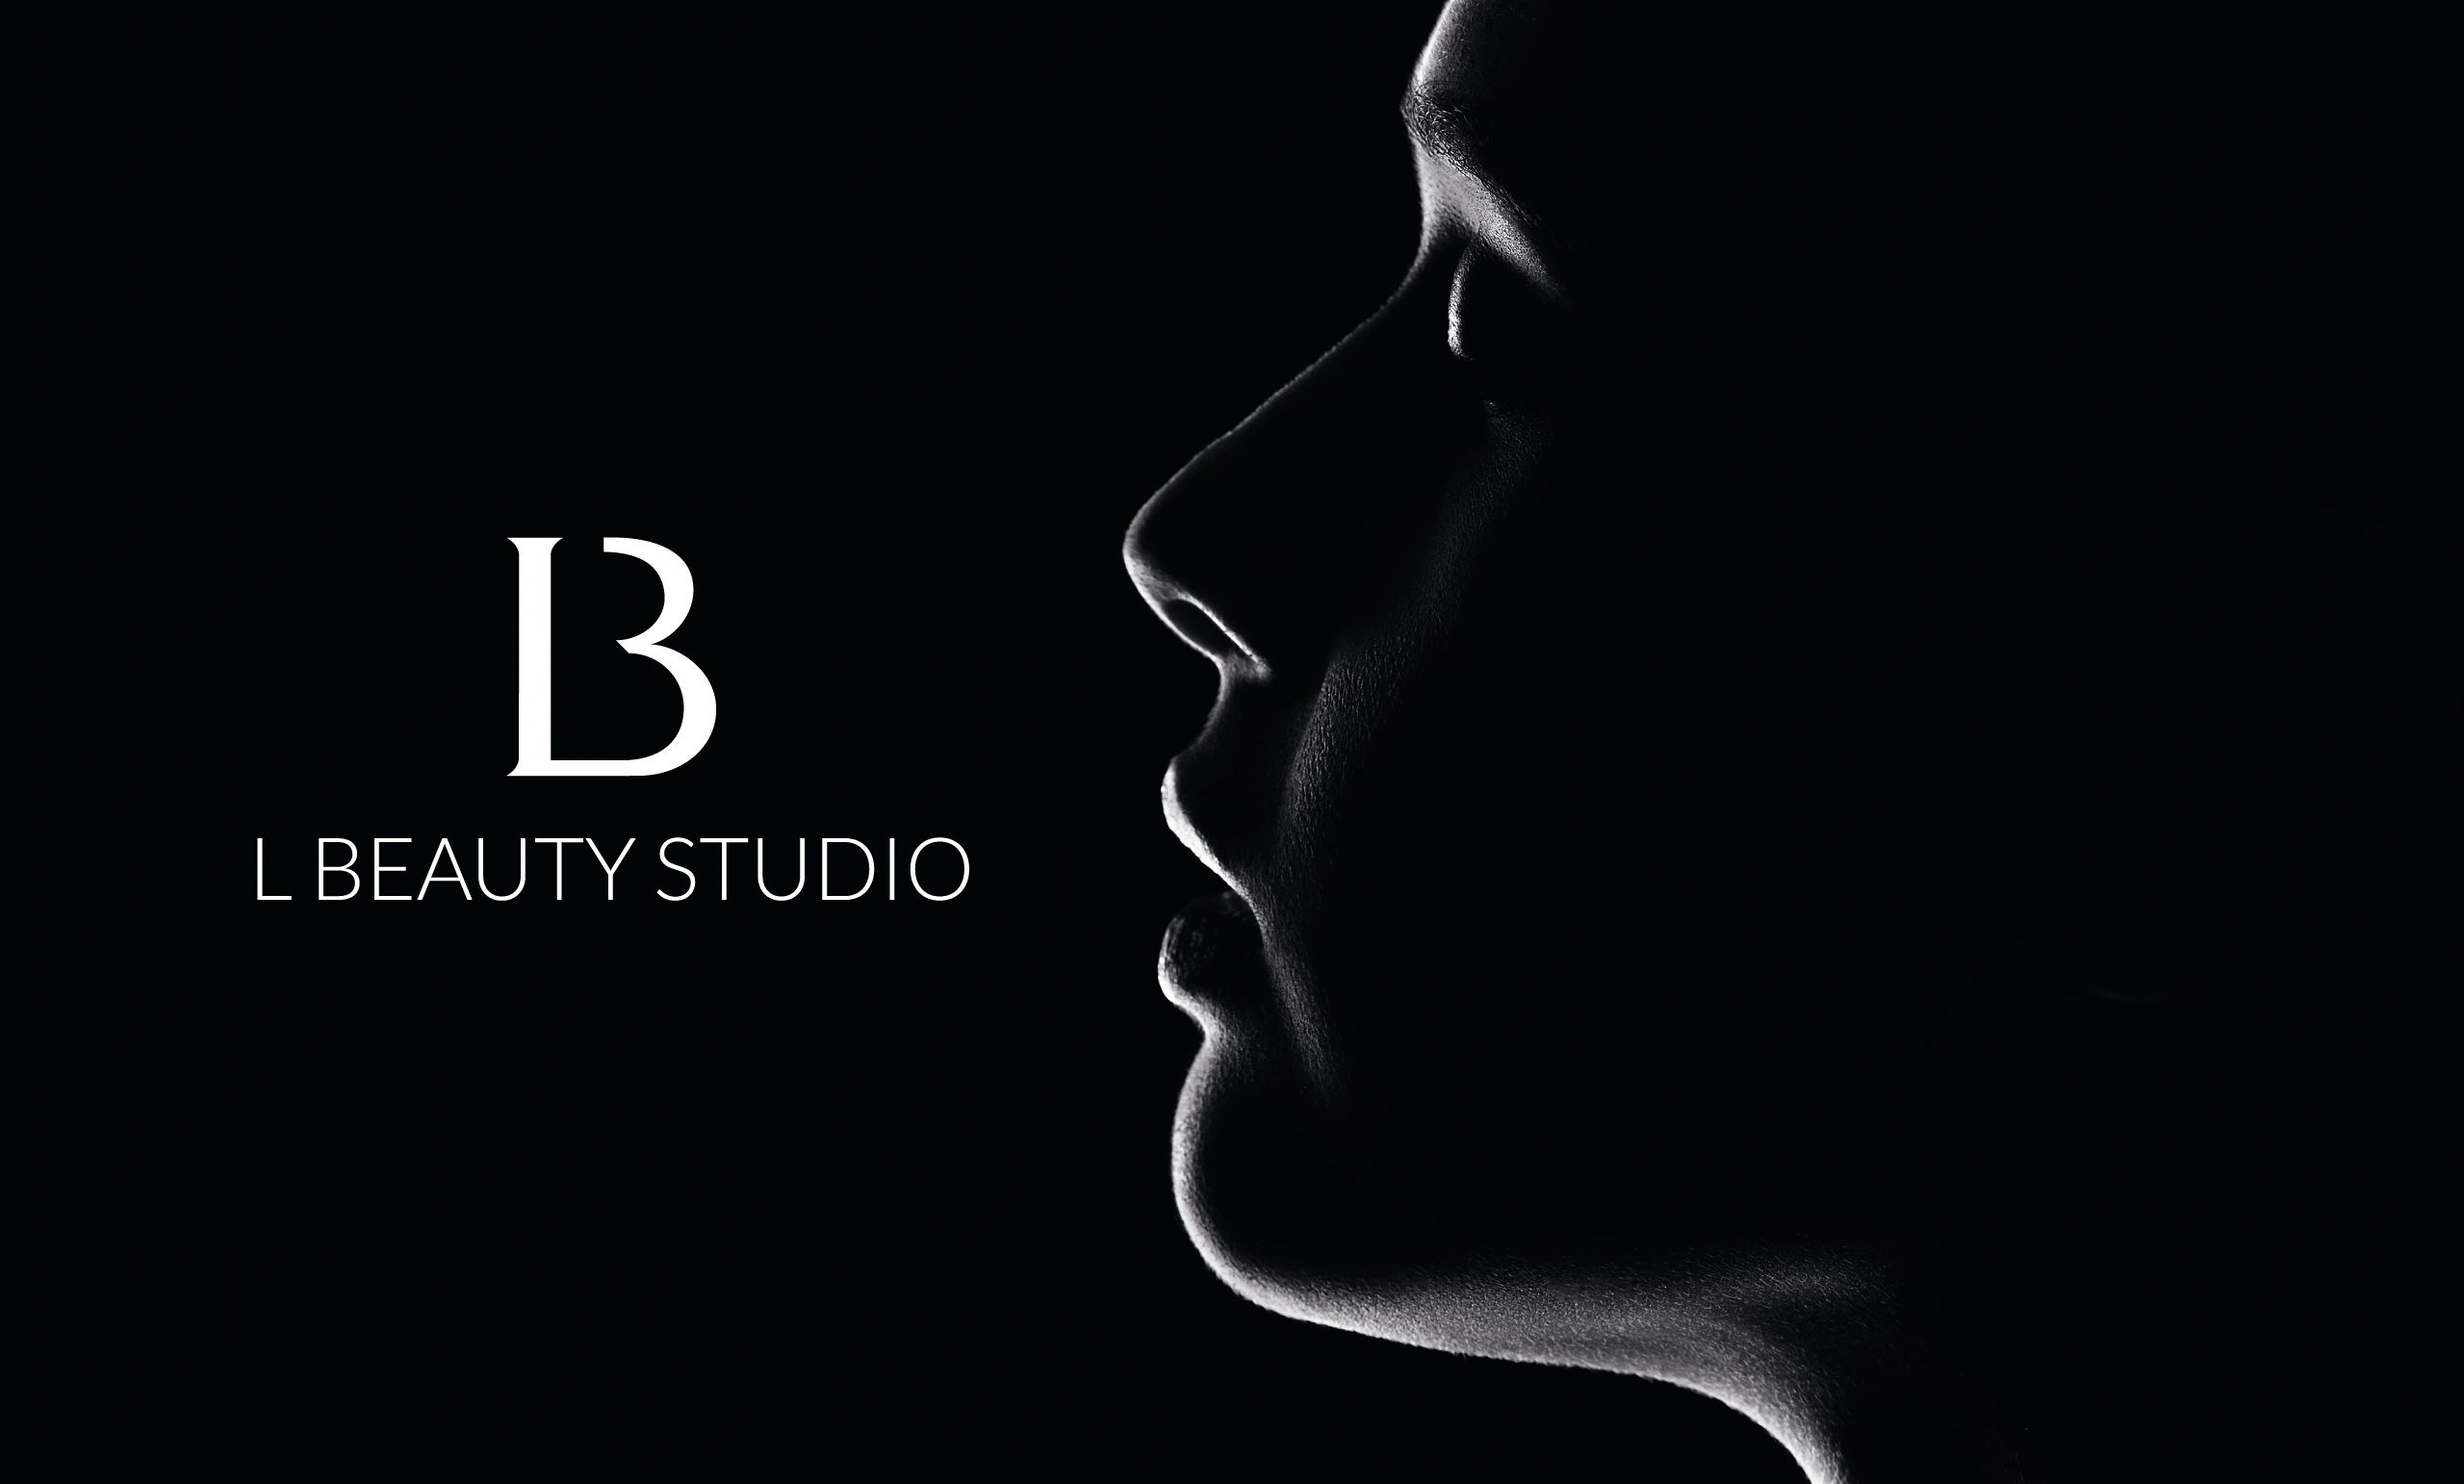 L Beauty studio - Beauty Salon, Skin Clinic, Beauty Treatments